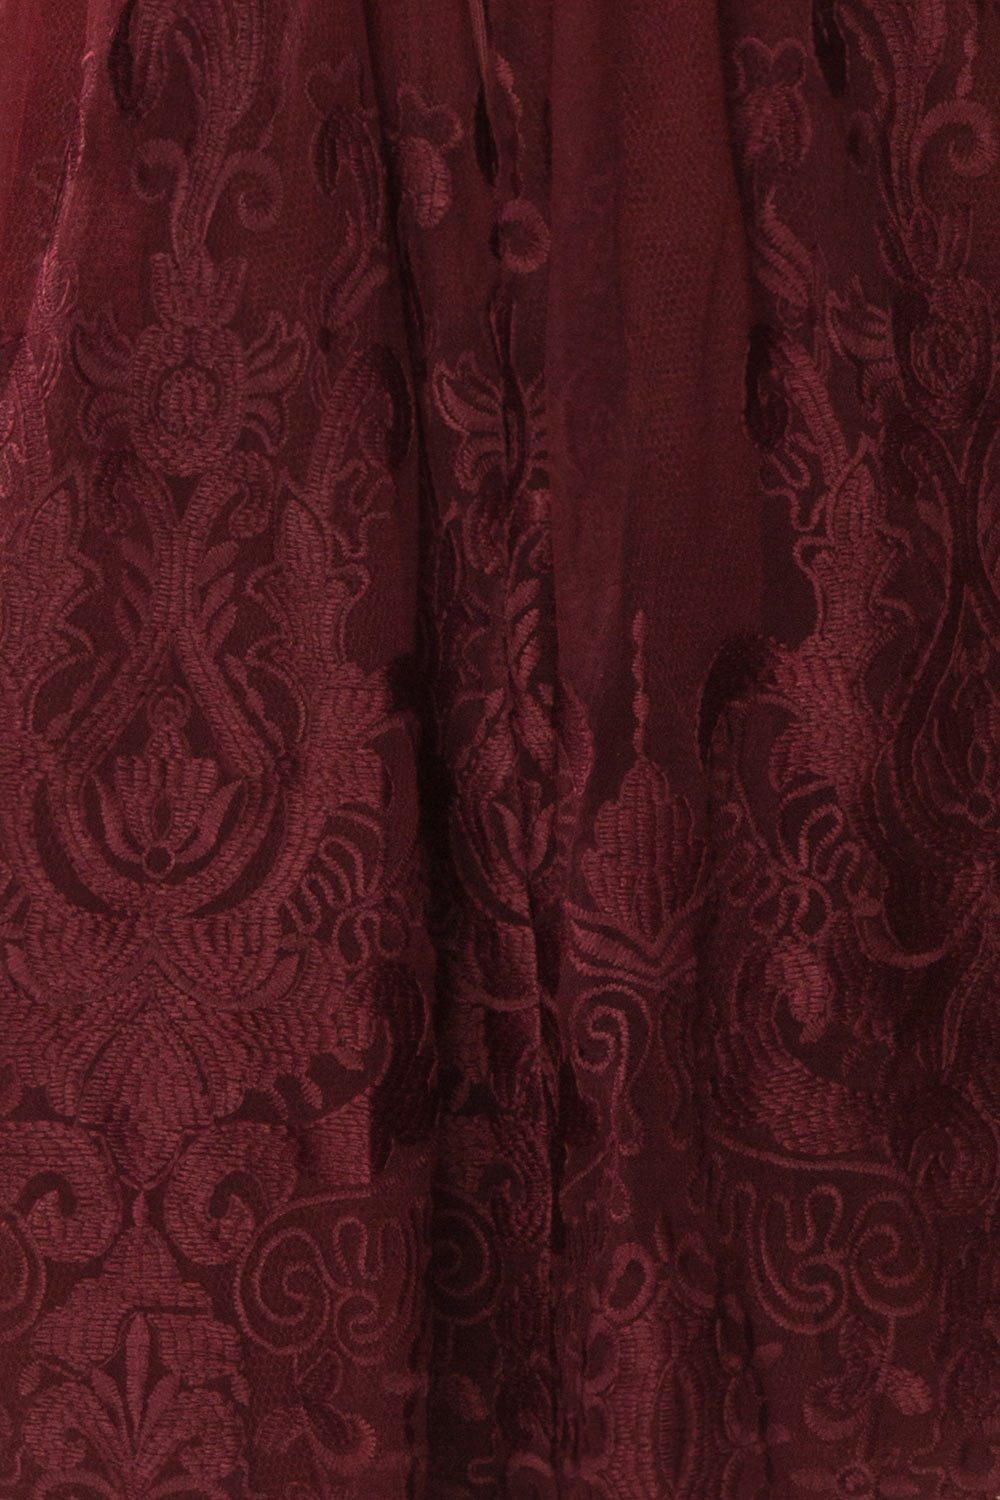 Fodla Burgundy Embroidered A-Line Dress | Boutique 1861